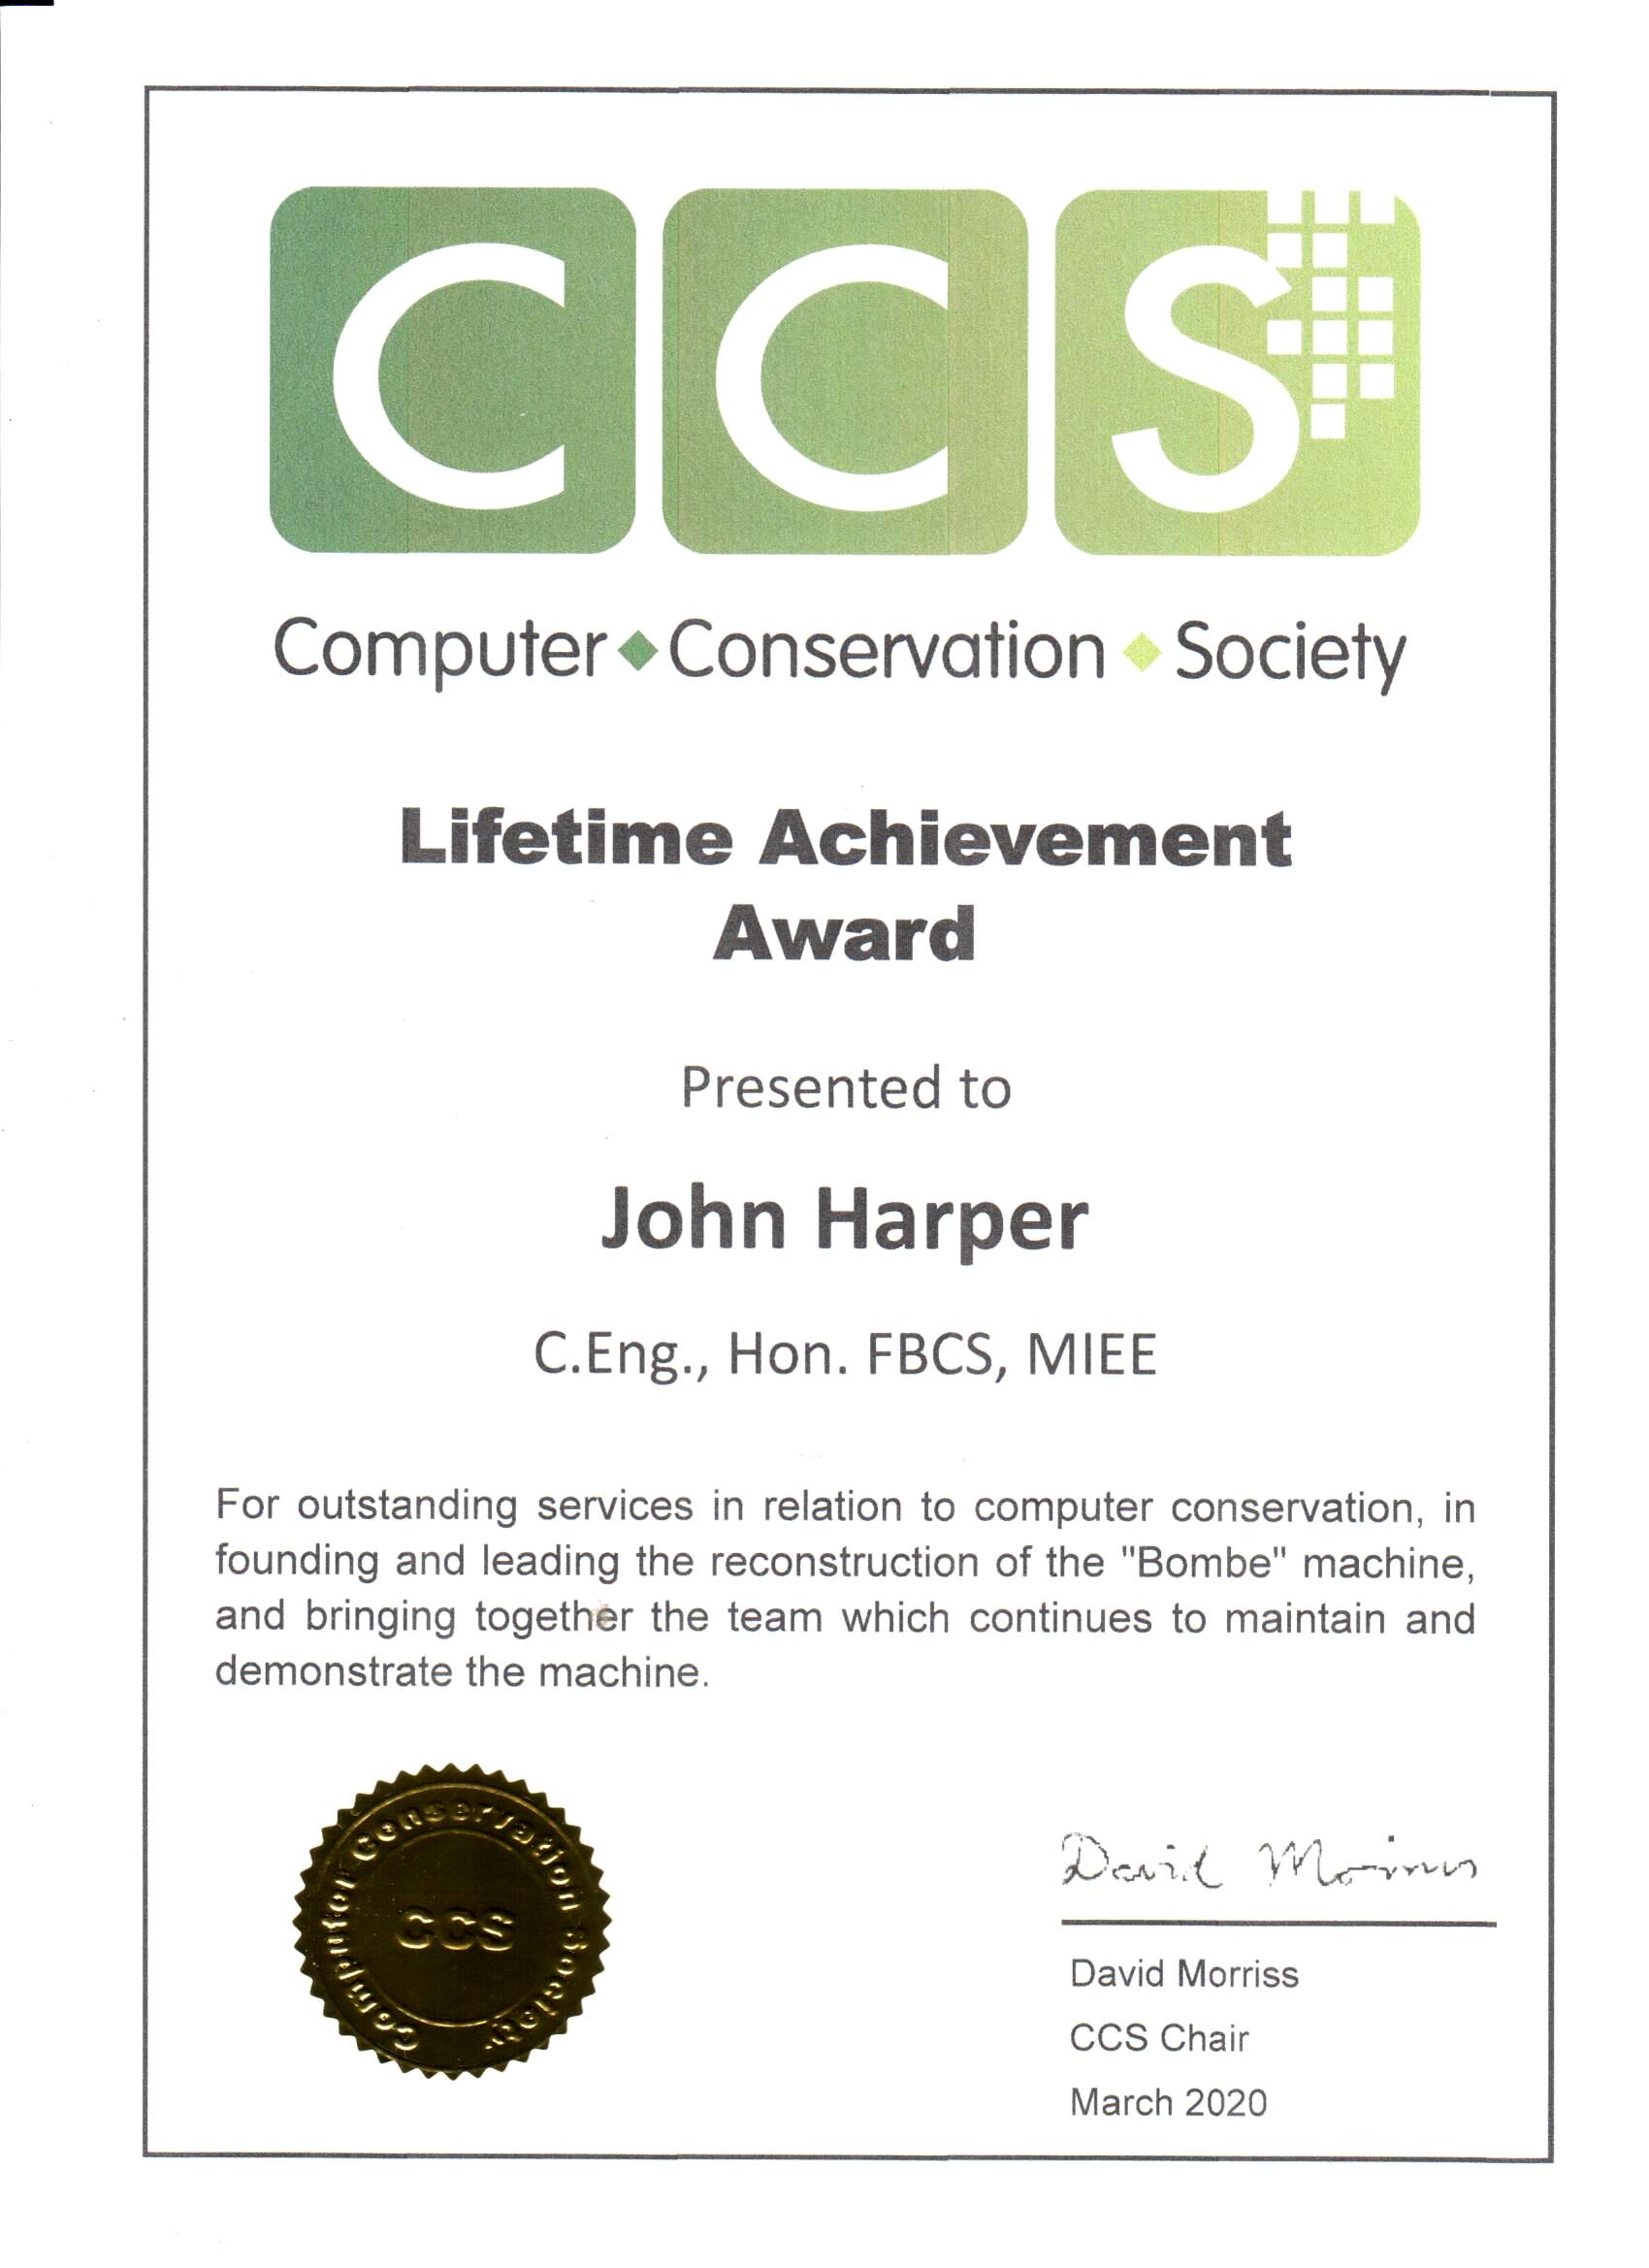 John Harper’s certificate